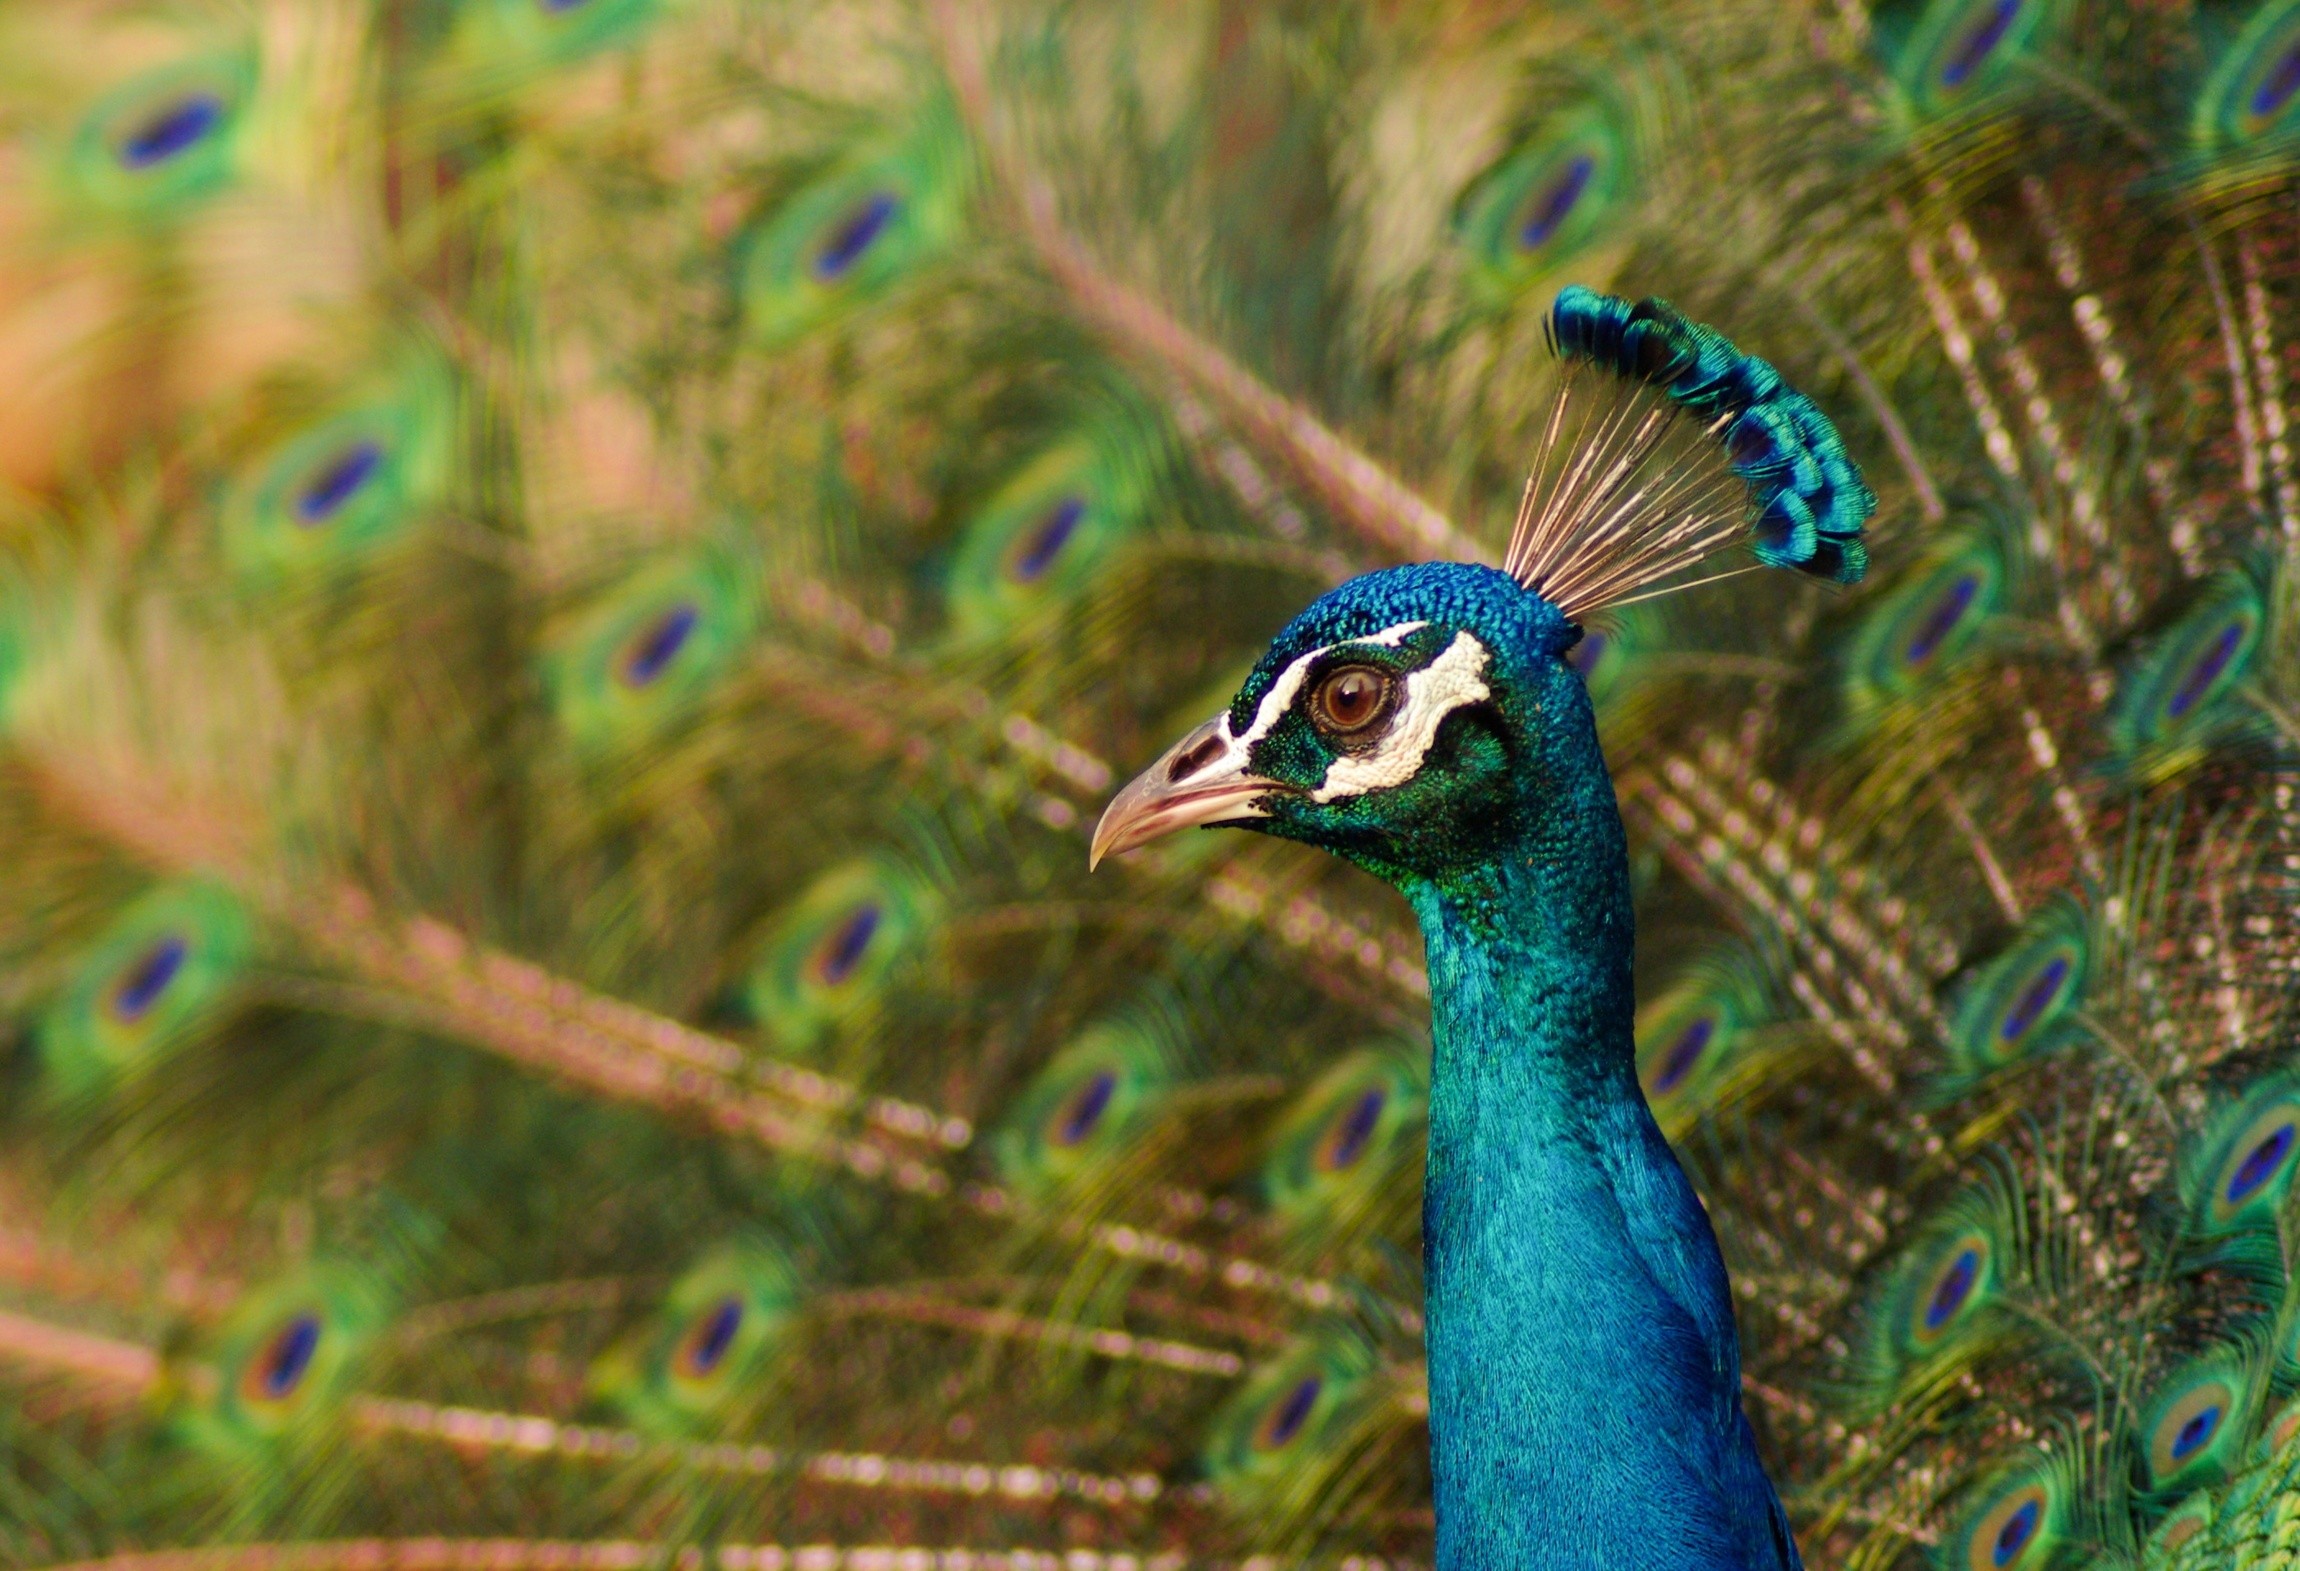 General 2300x1571 animals birds colorful peacocks closeup